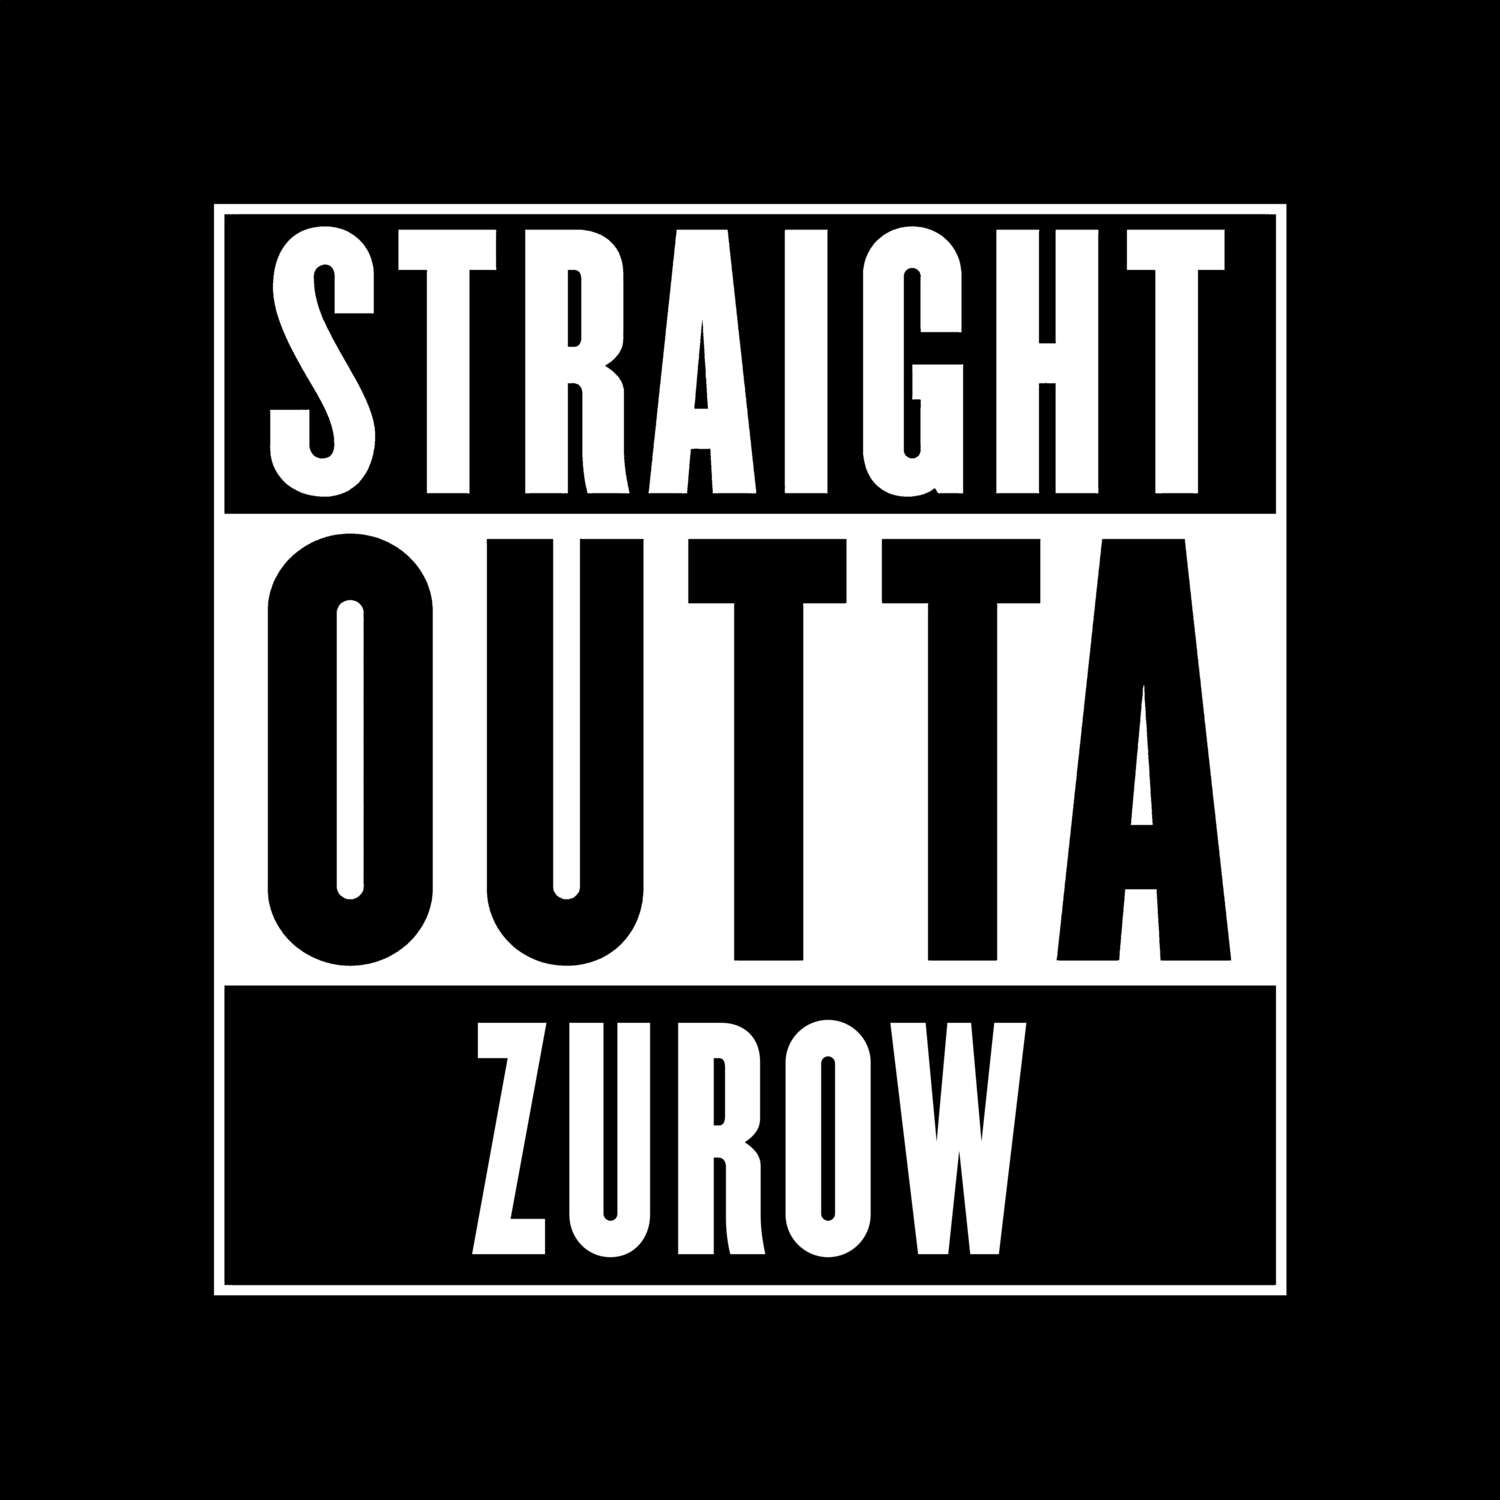 Zurow T-Shirt »Straight Outta«